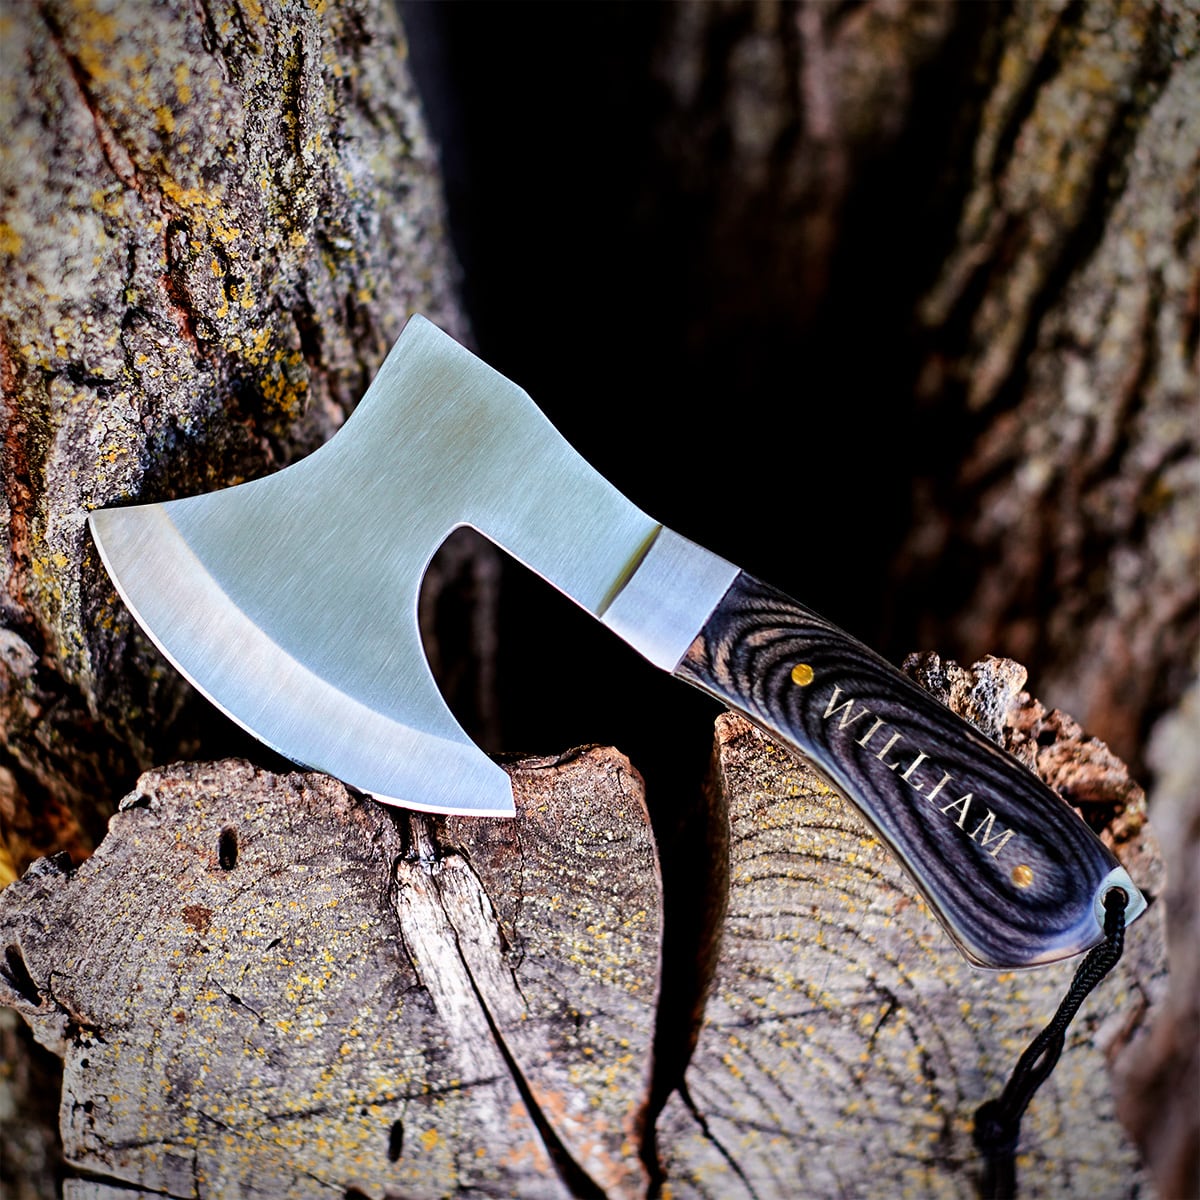 The Choppa Personalized Meat Cleaver Knife - Hatchet w Ebony Wood Handle